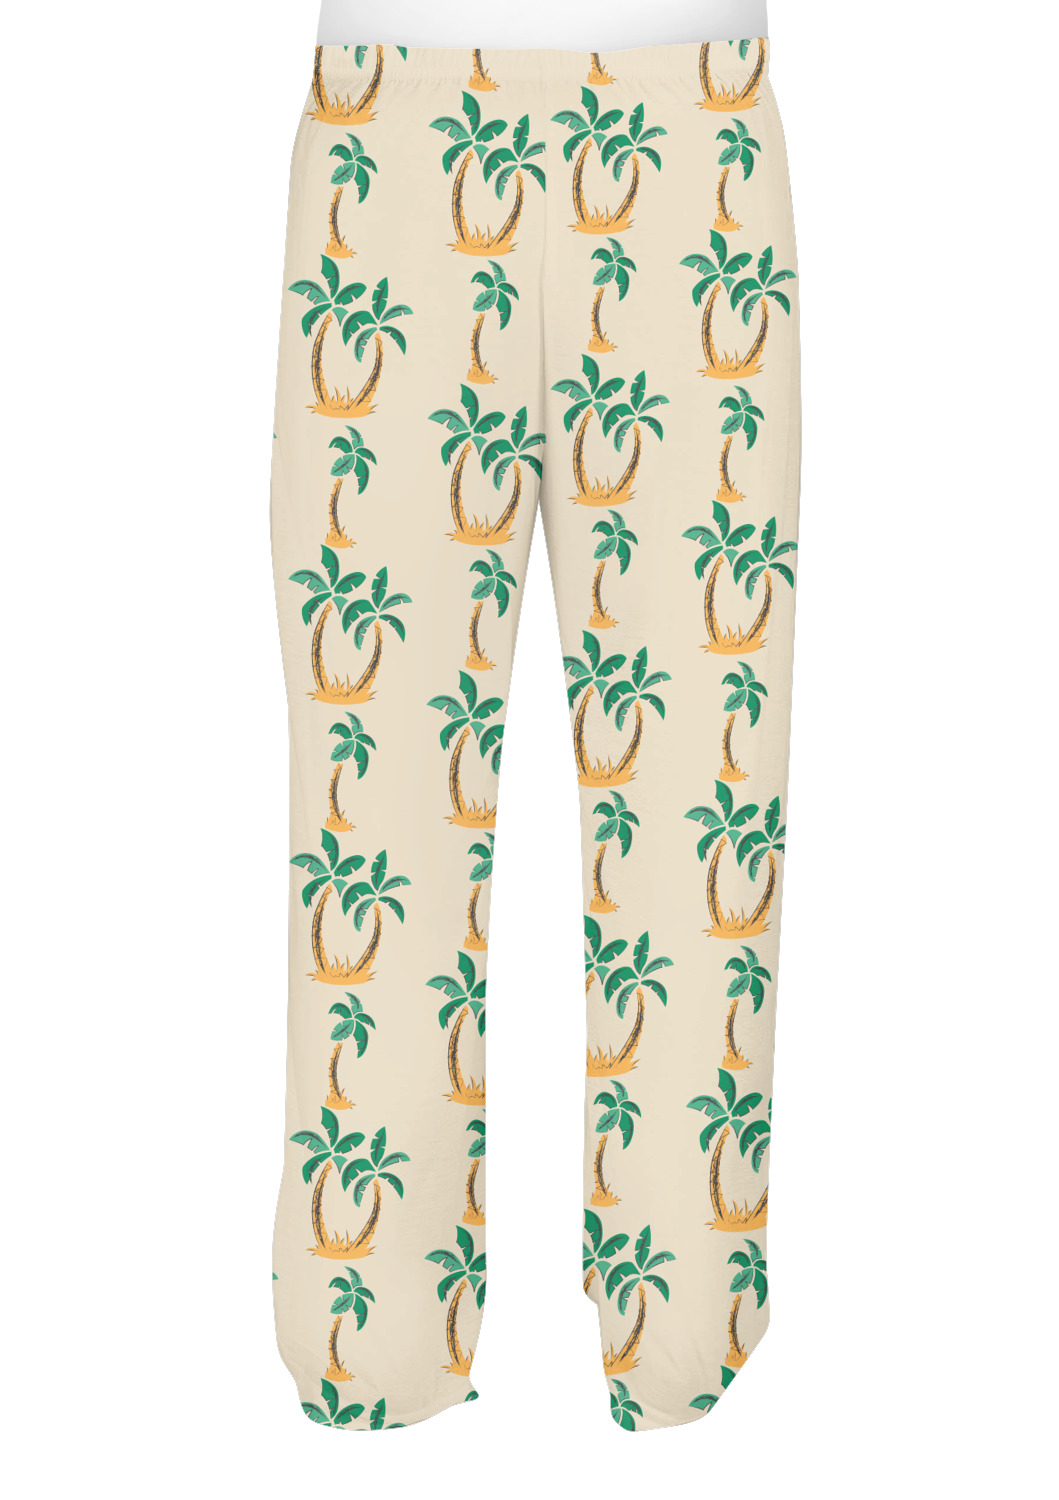 Palm Trees Mens Pajama Pants (Personalized) - YouCustomizeIt